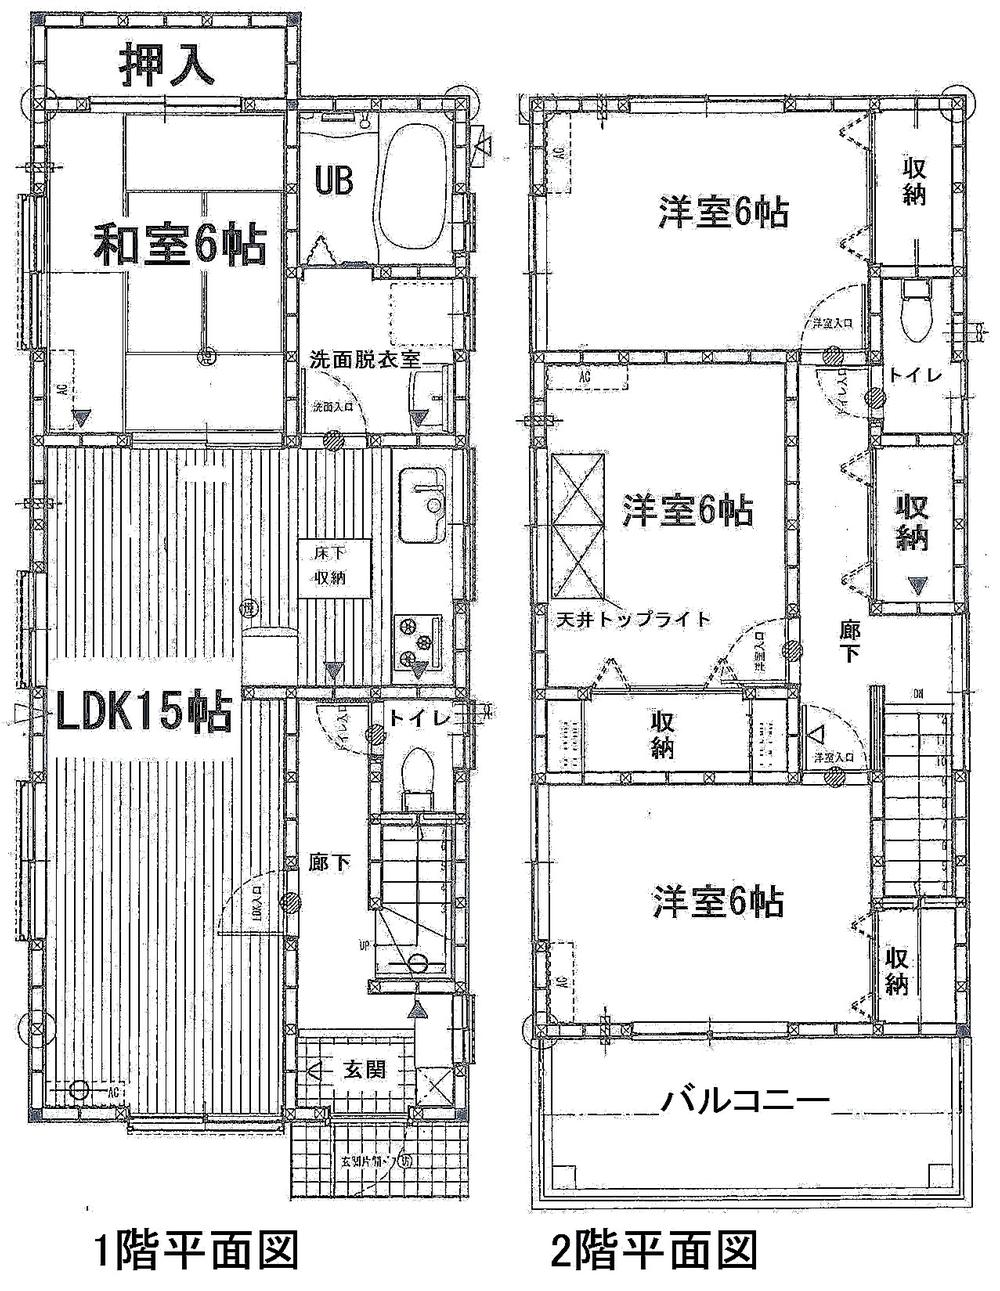 Floor plan. Price 34,800,000 yen, 4LDK, Land area 109.6 sq m , Building area 97.72 sq m